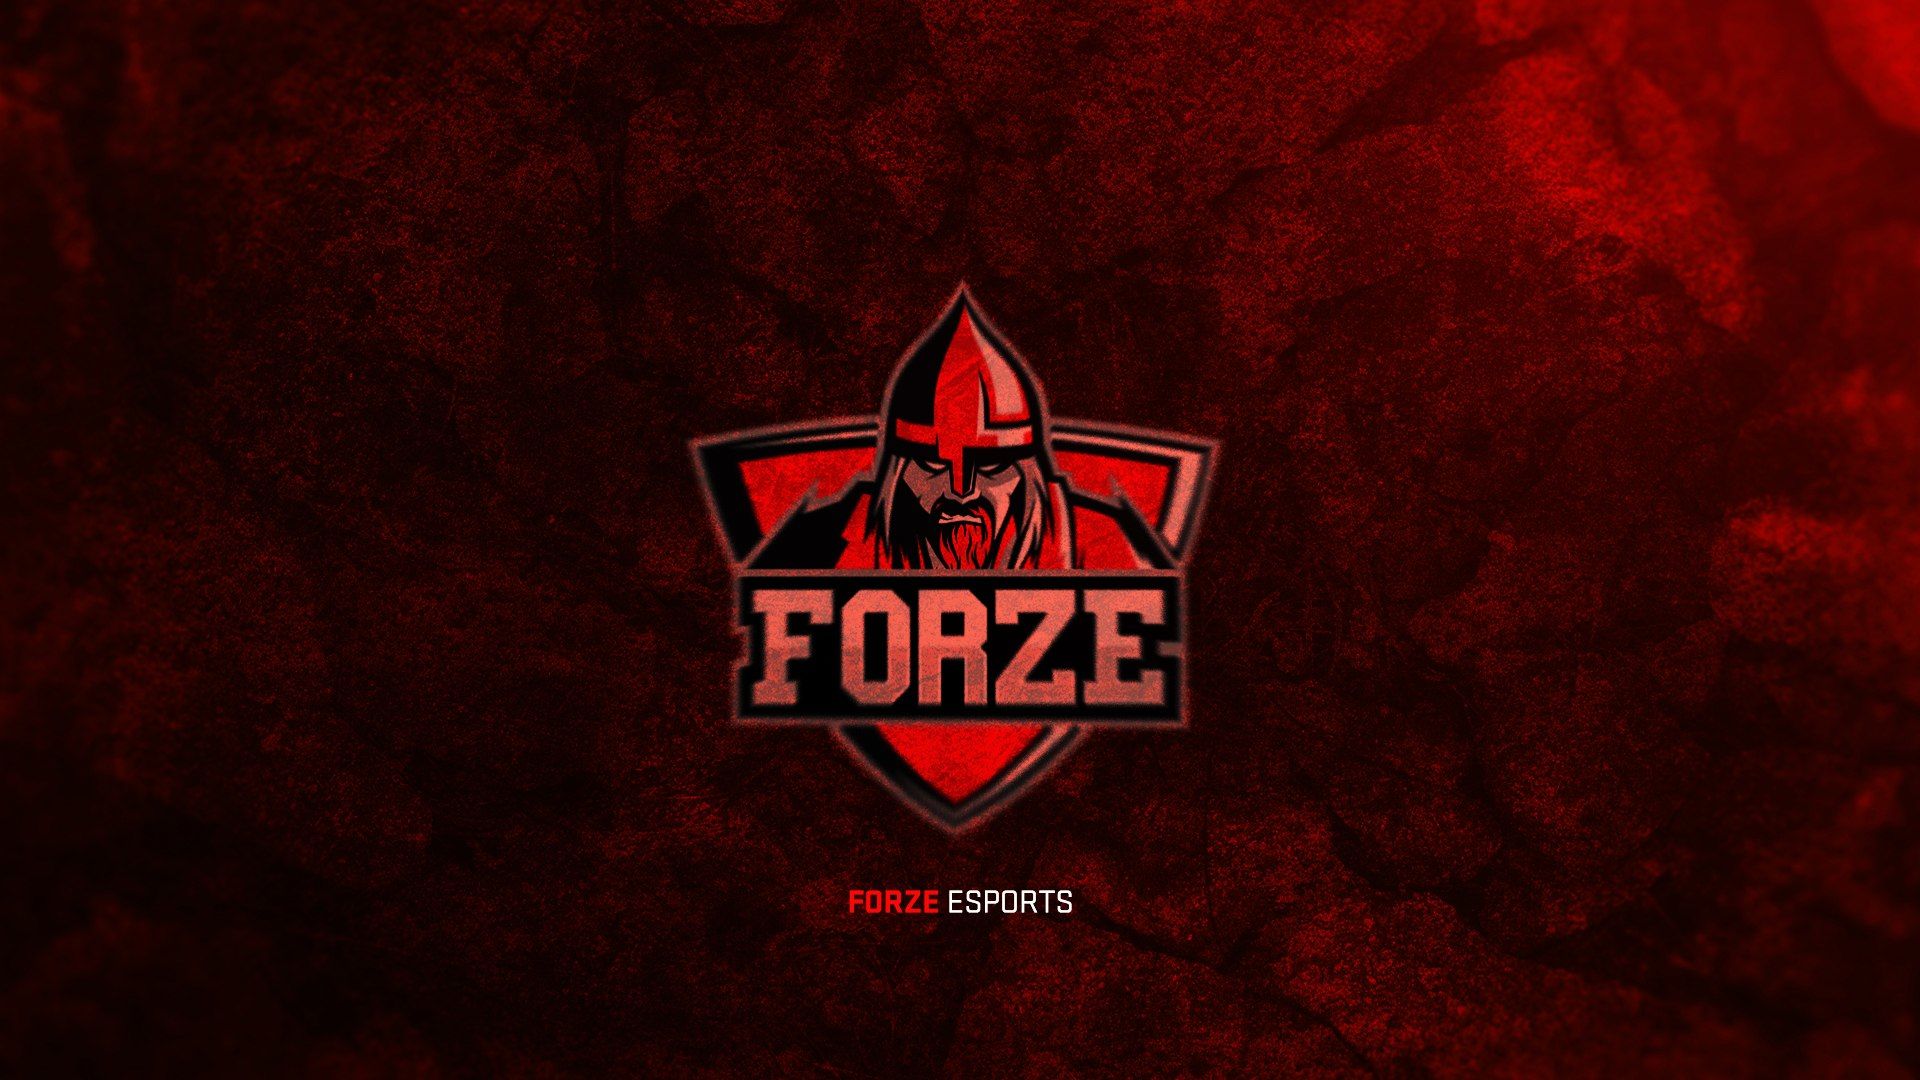 ForZe вышла в финал верхней сетки FunSpark ULTI 2020